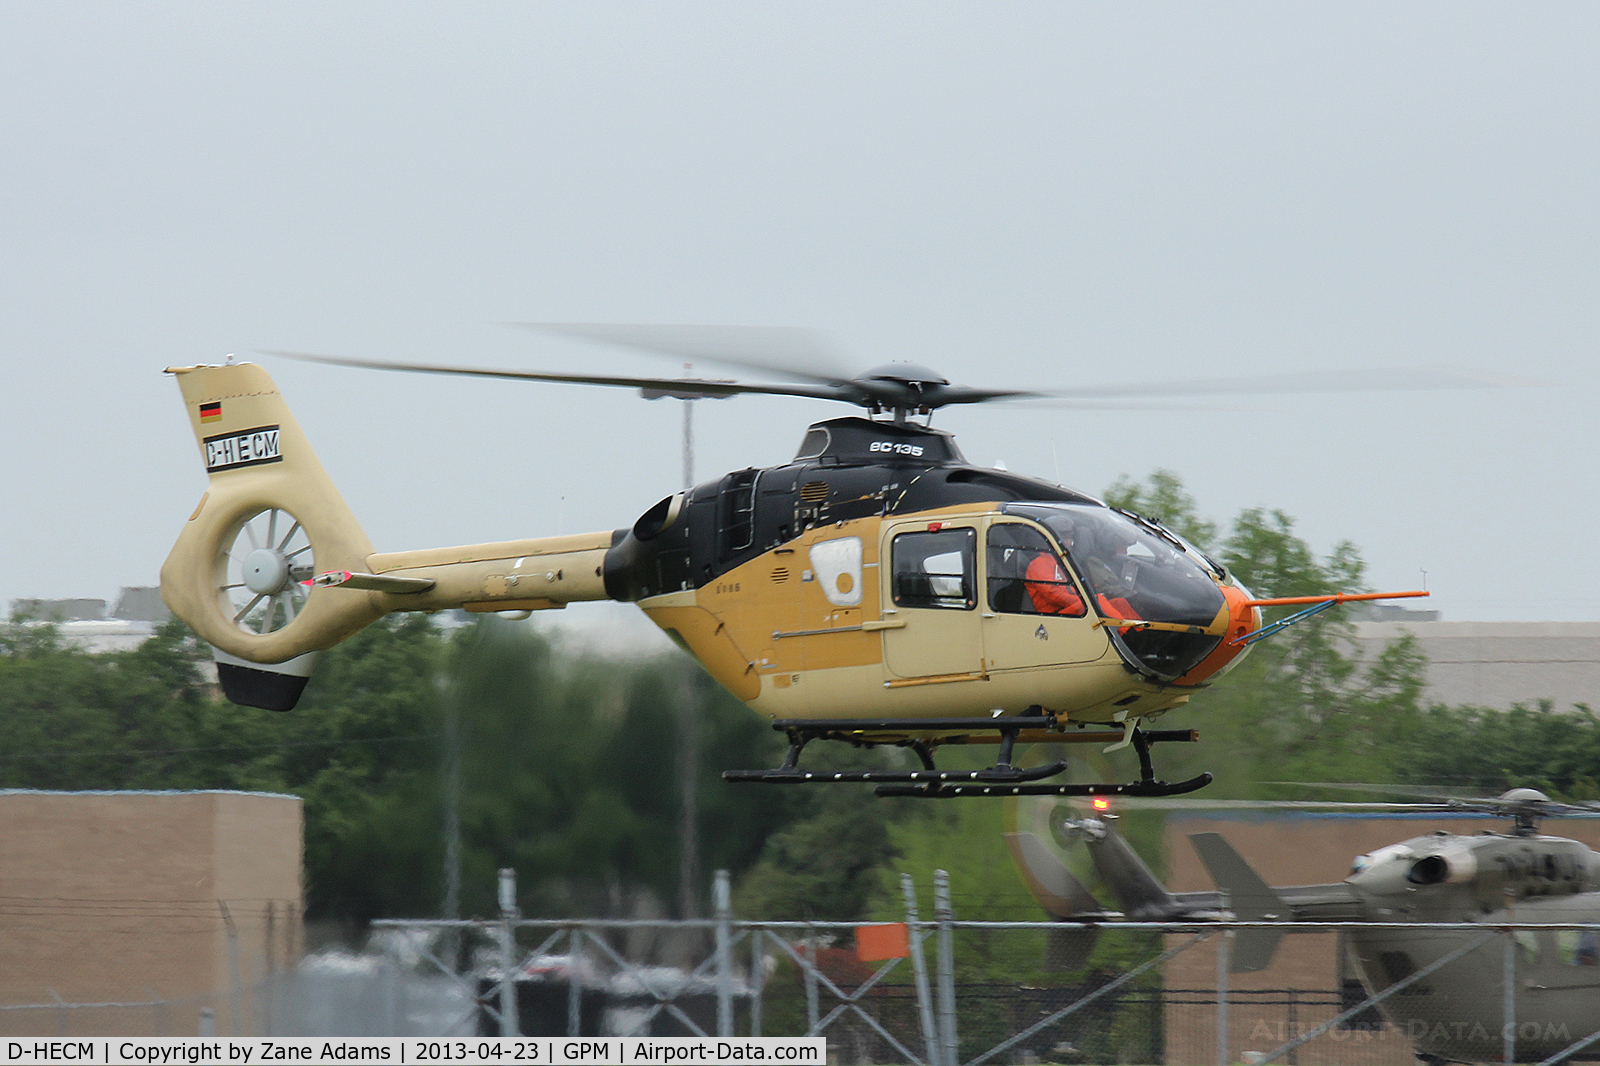 D-HECM, 2012 Eurocopter EC-635 (EC-135) C/N 0886, Eurocopter at Grand Prairie Municipal